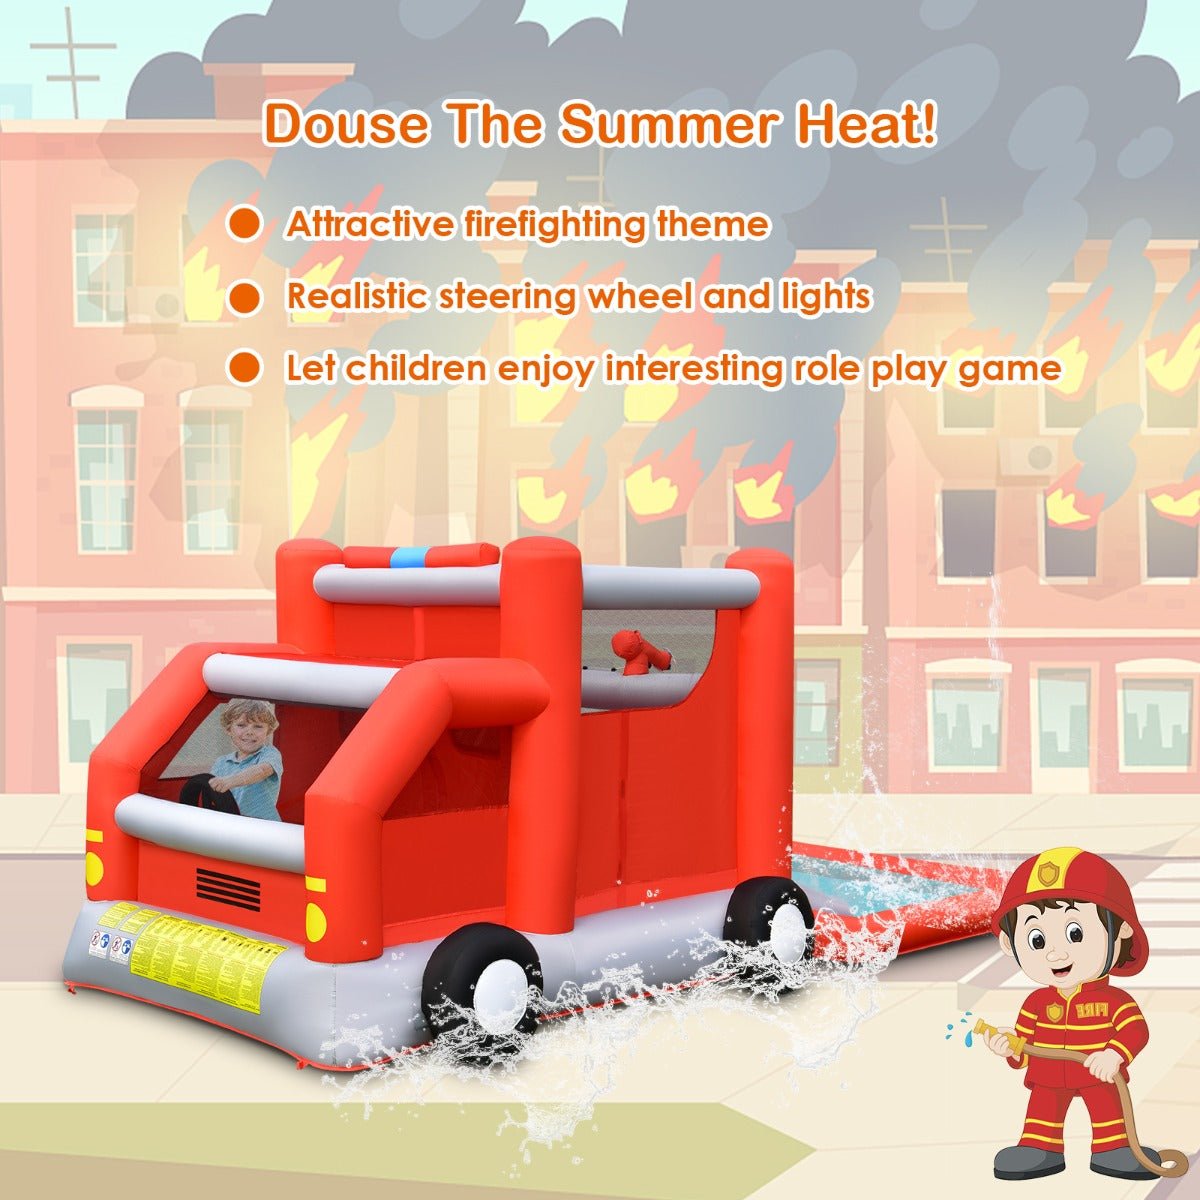 Firefighter Adventure Water Slide for Kids - Splash into Imaginative Play